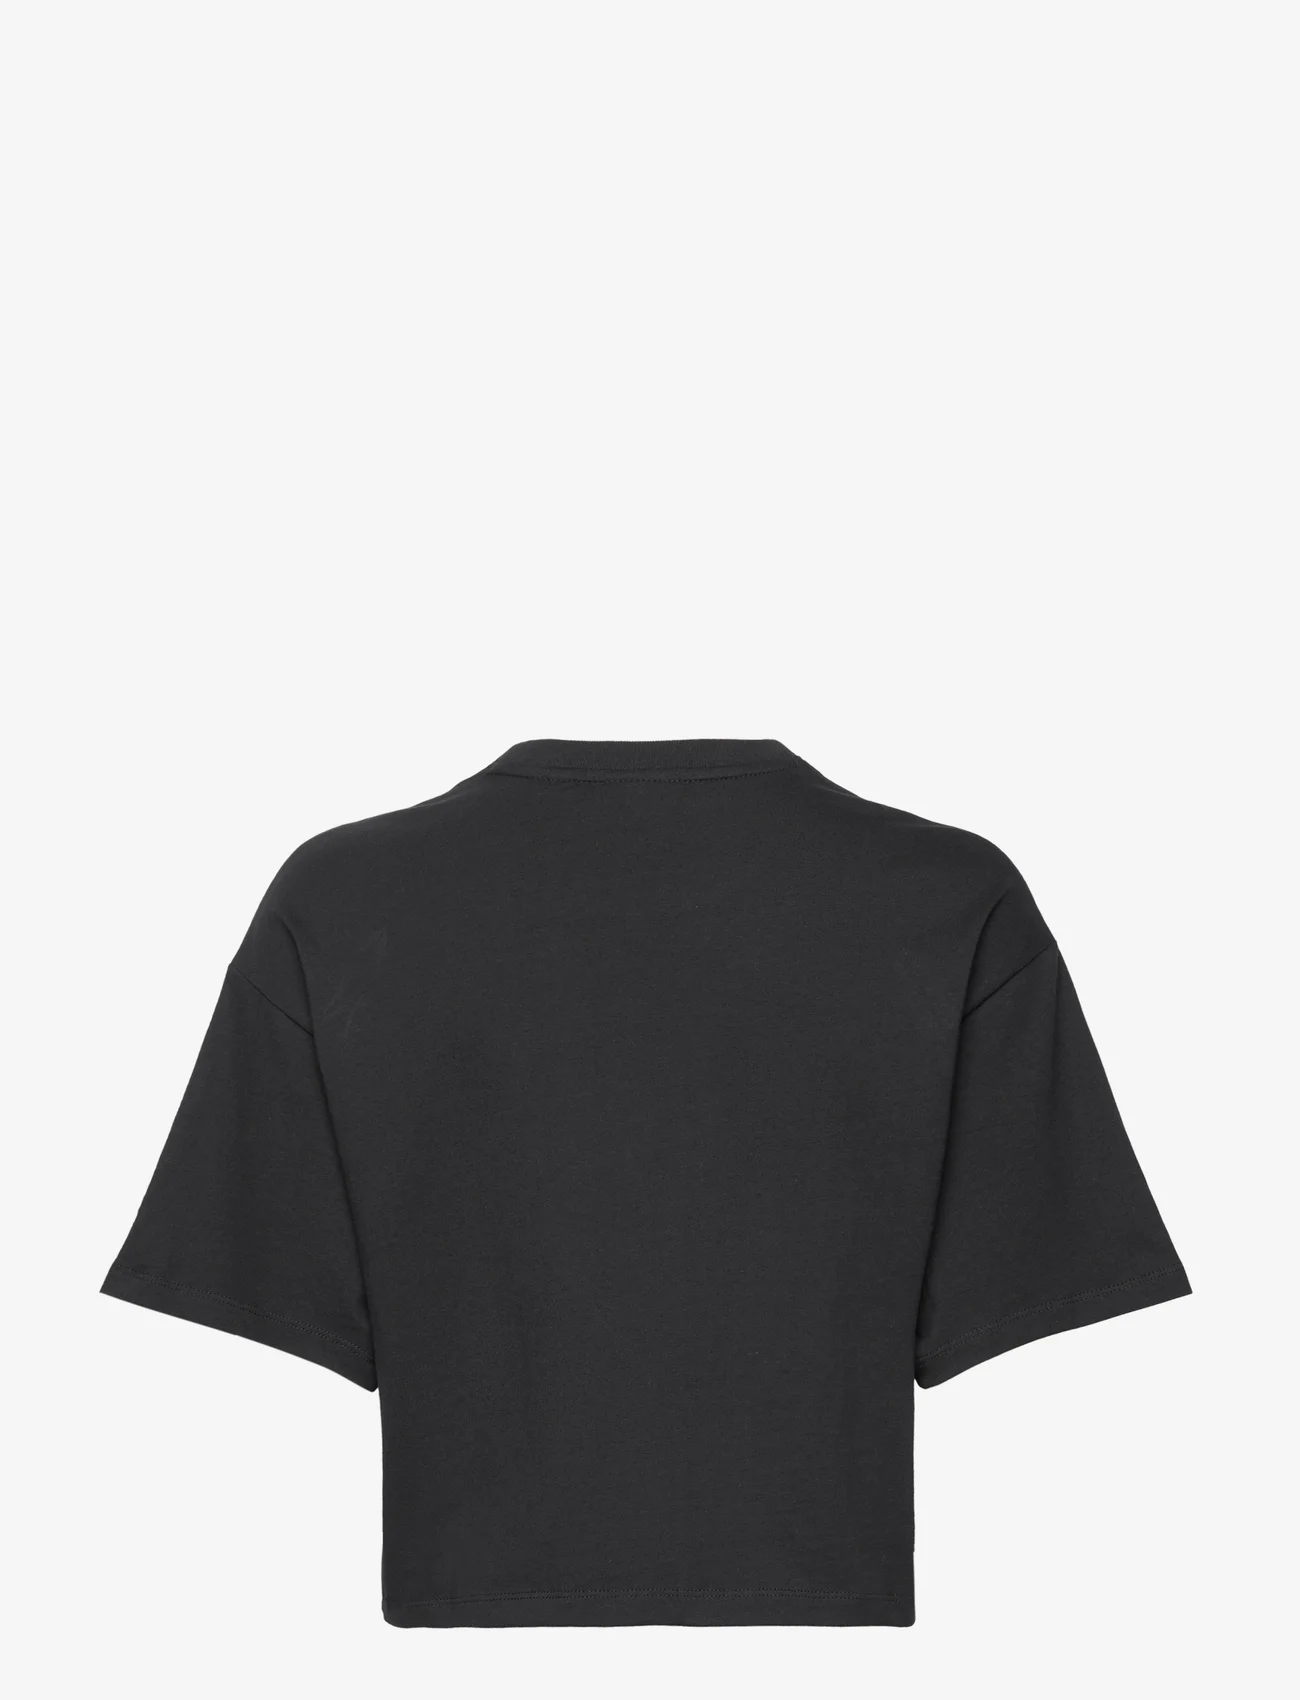 Superdry - CODE MICRO LOGO TEE - t-shirts - black - 1